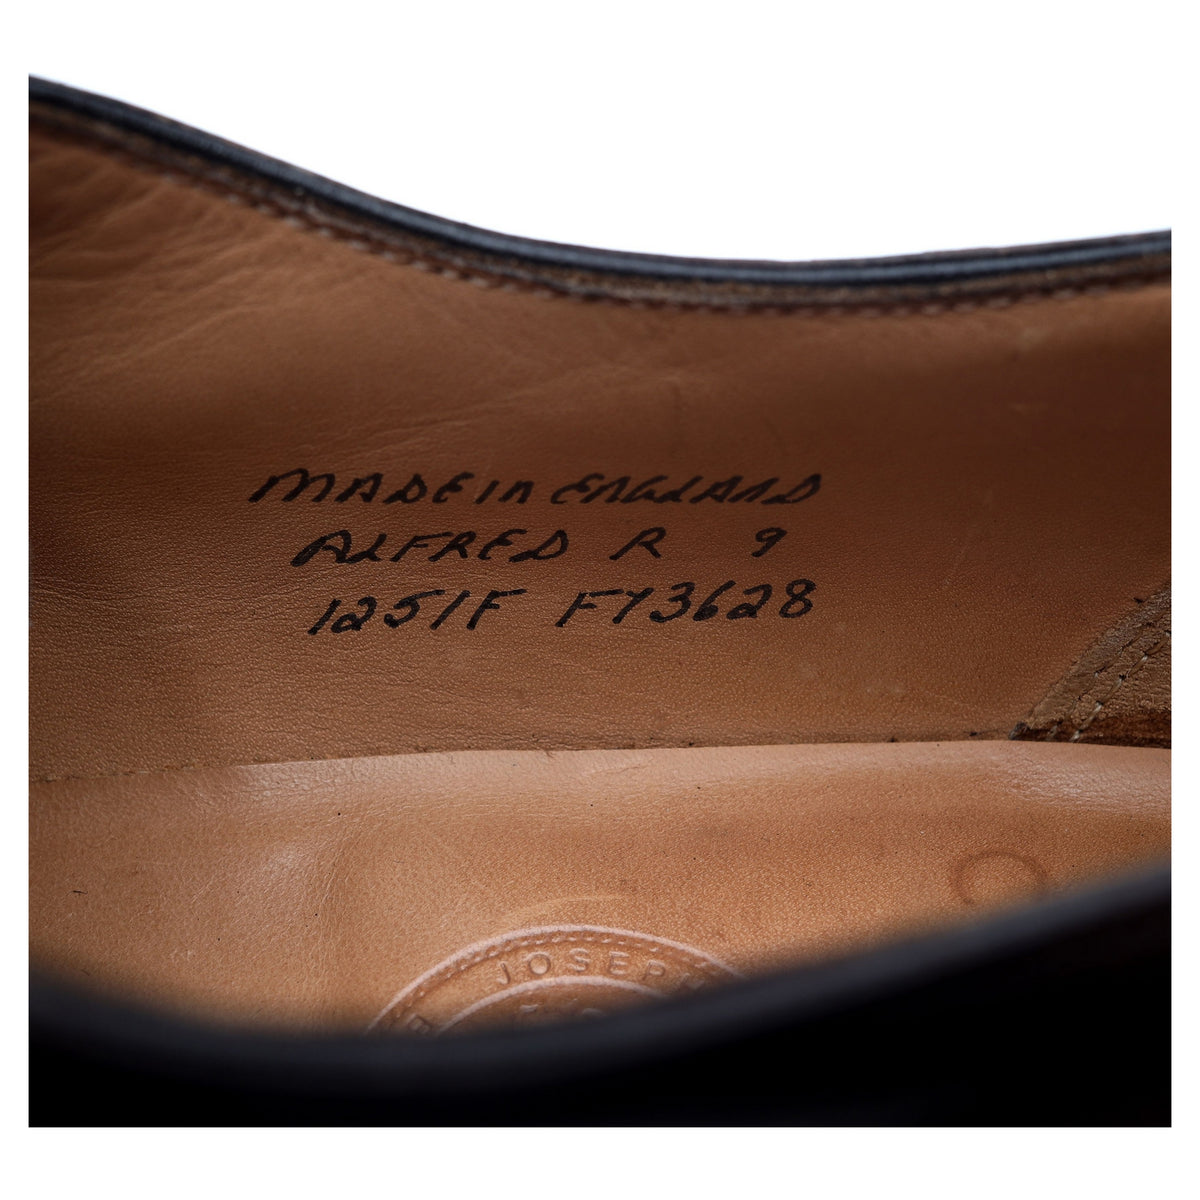 &#39;Alfred&#39; Dark Brown Leather Oxford UK 9 F